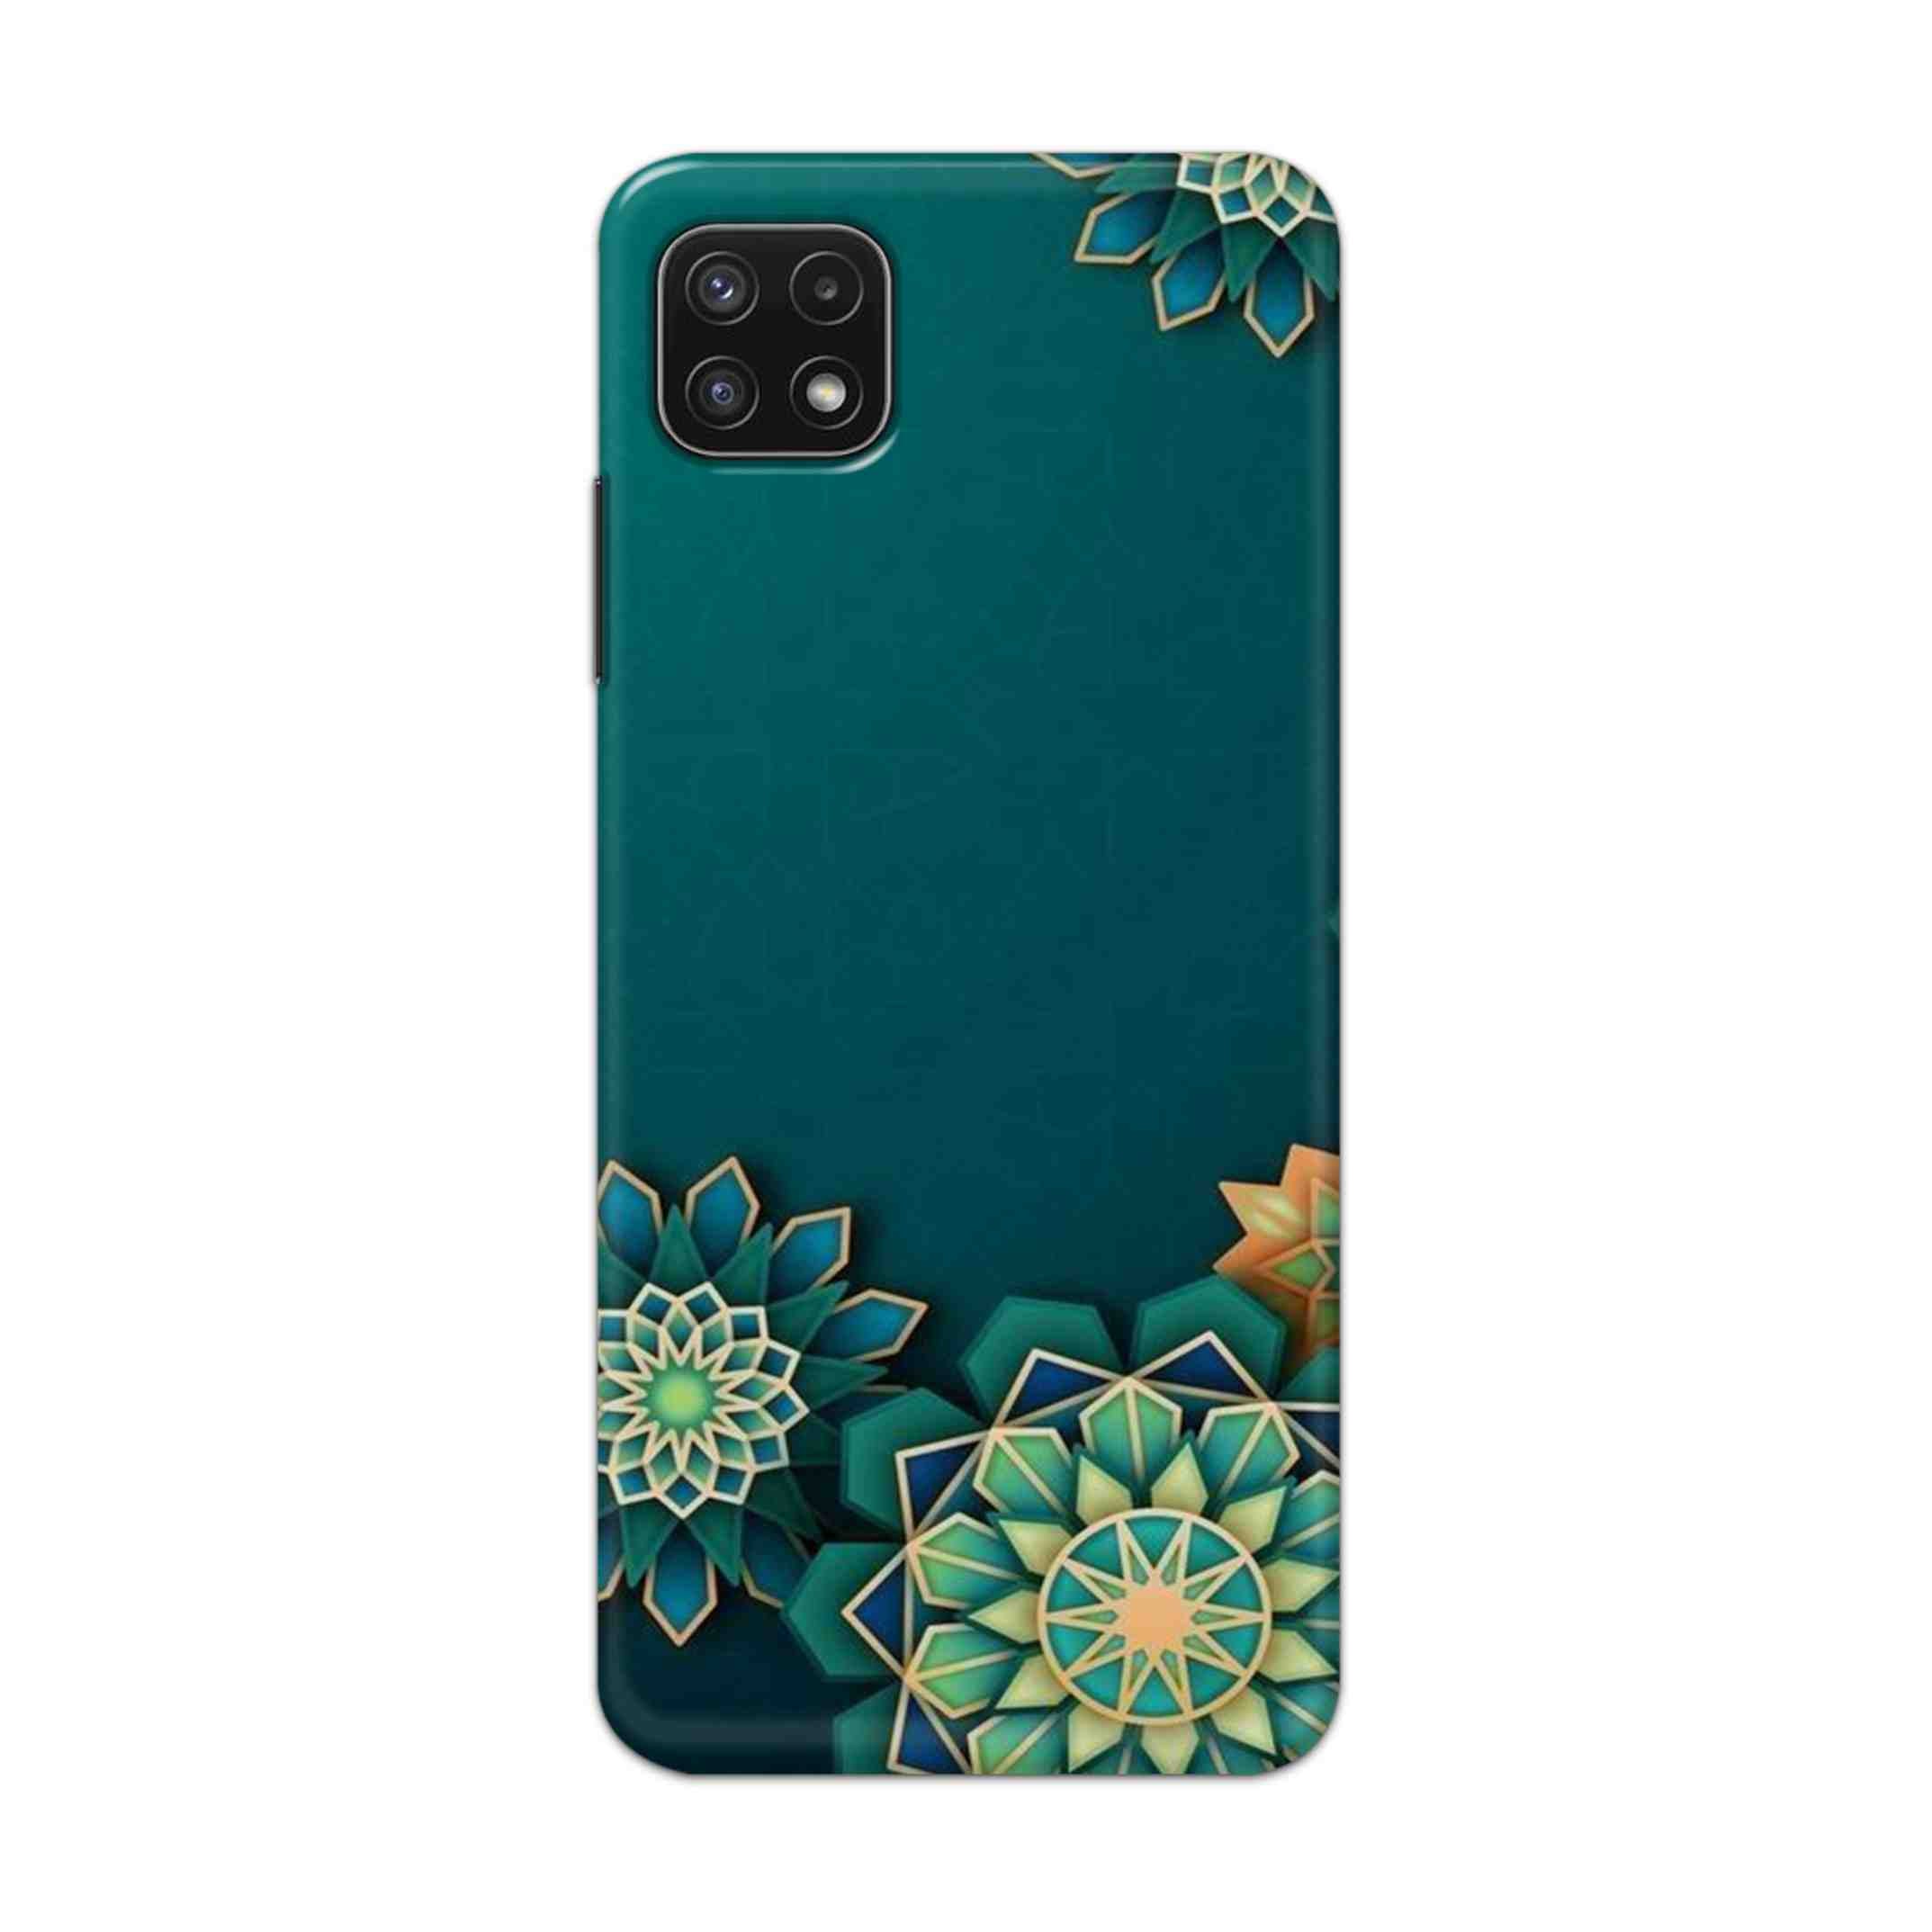 Buy Green Flower Hard Back Mobile Phone Case Cover For Samsung A22 5G Online